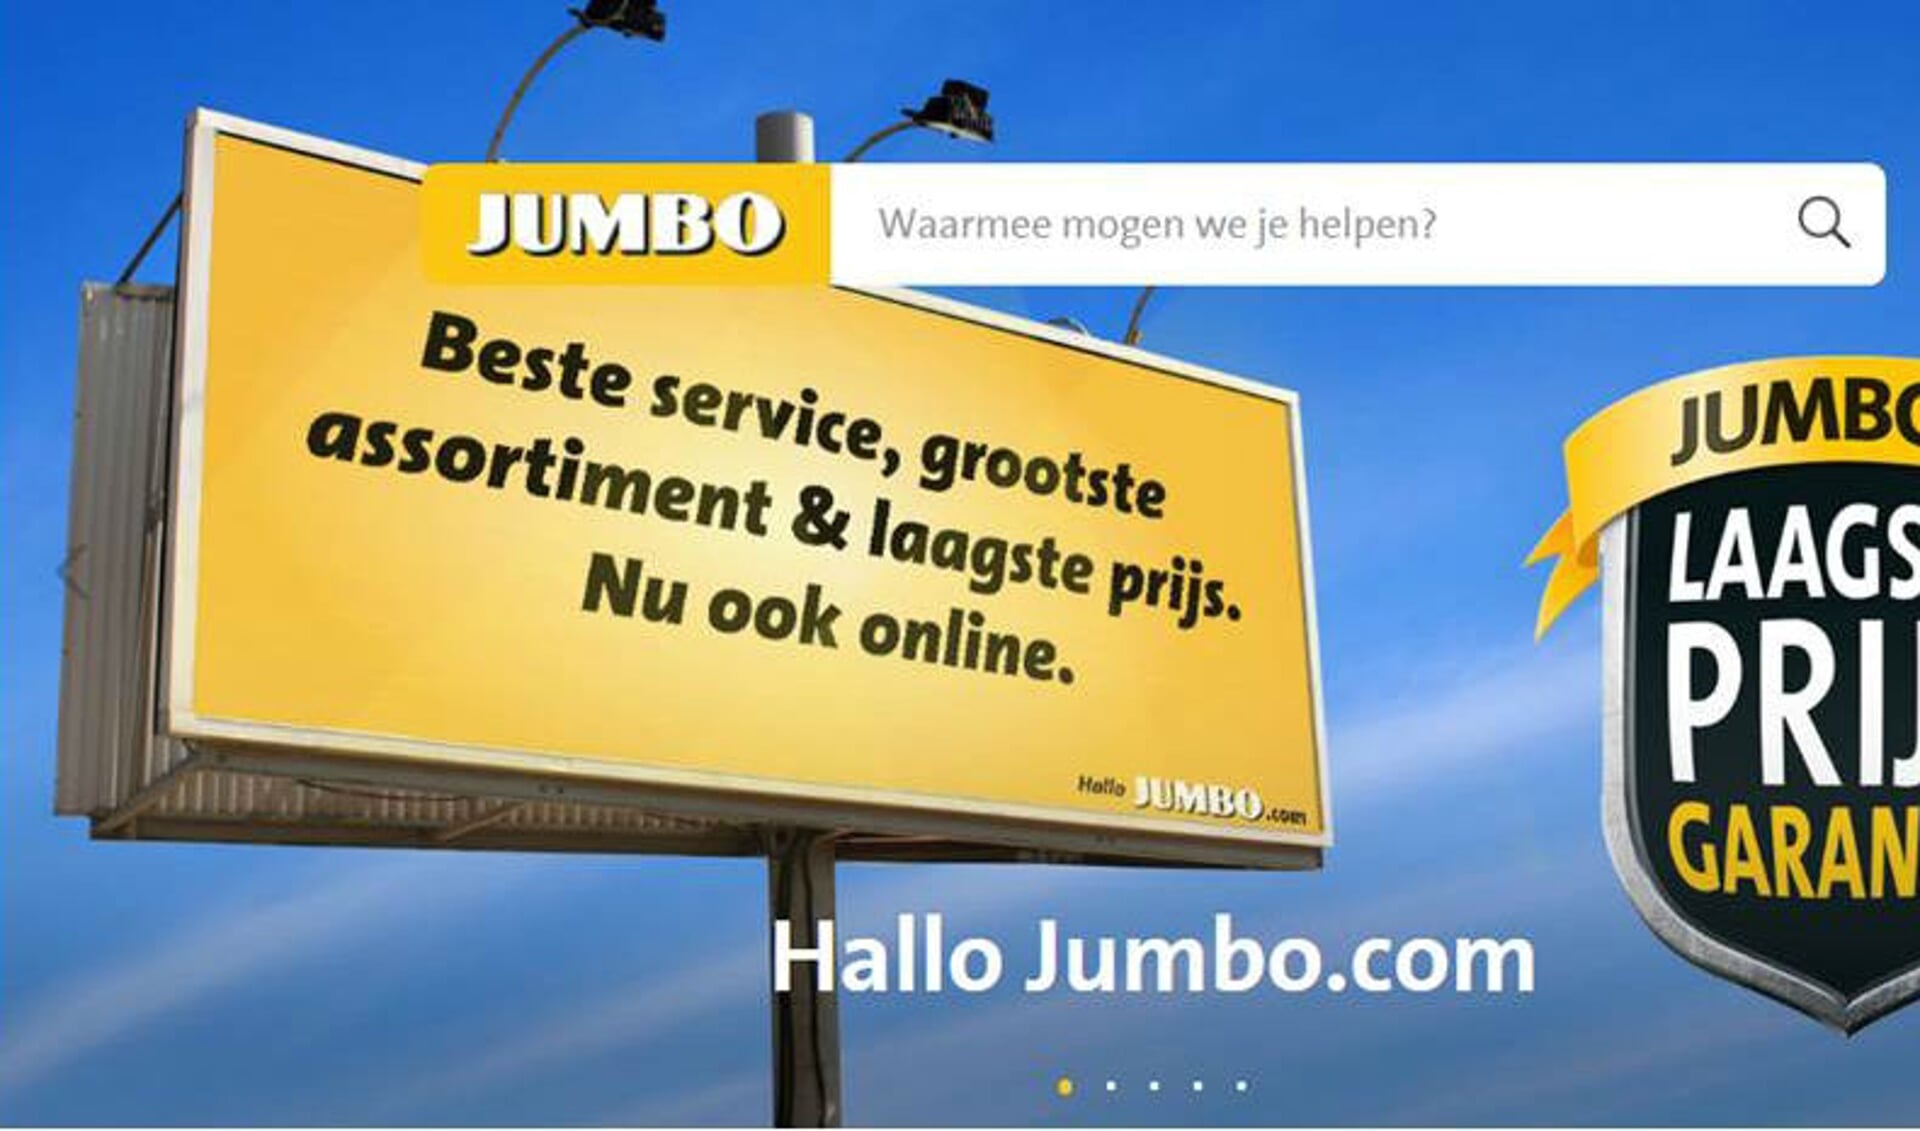 Hallo Jumbo.com